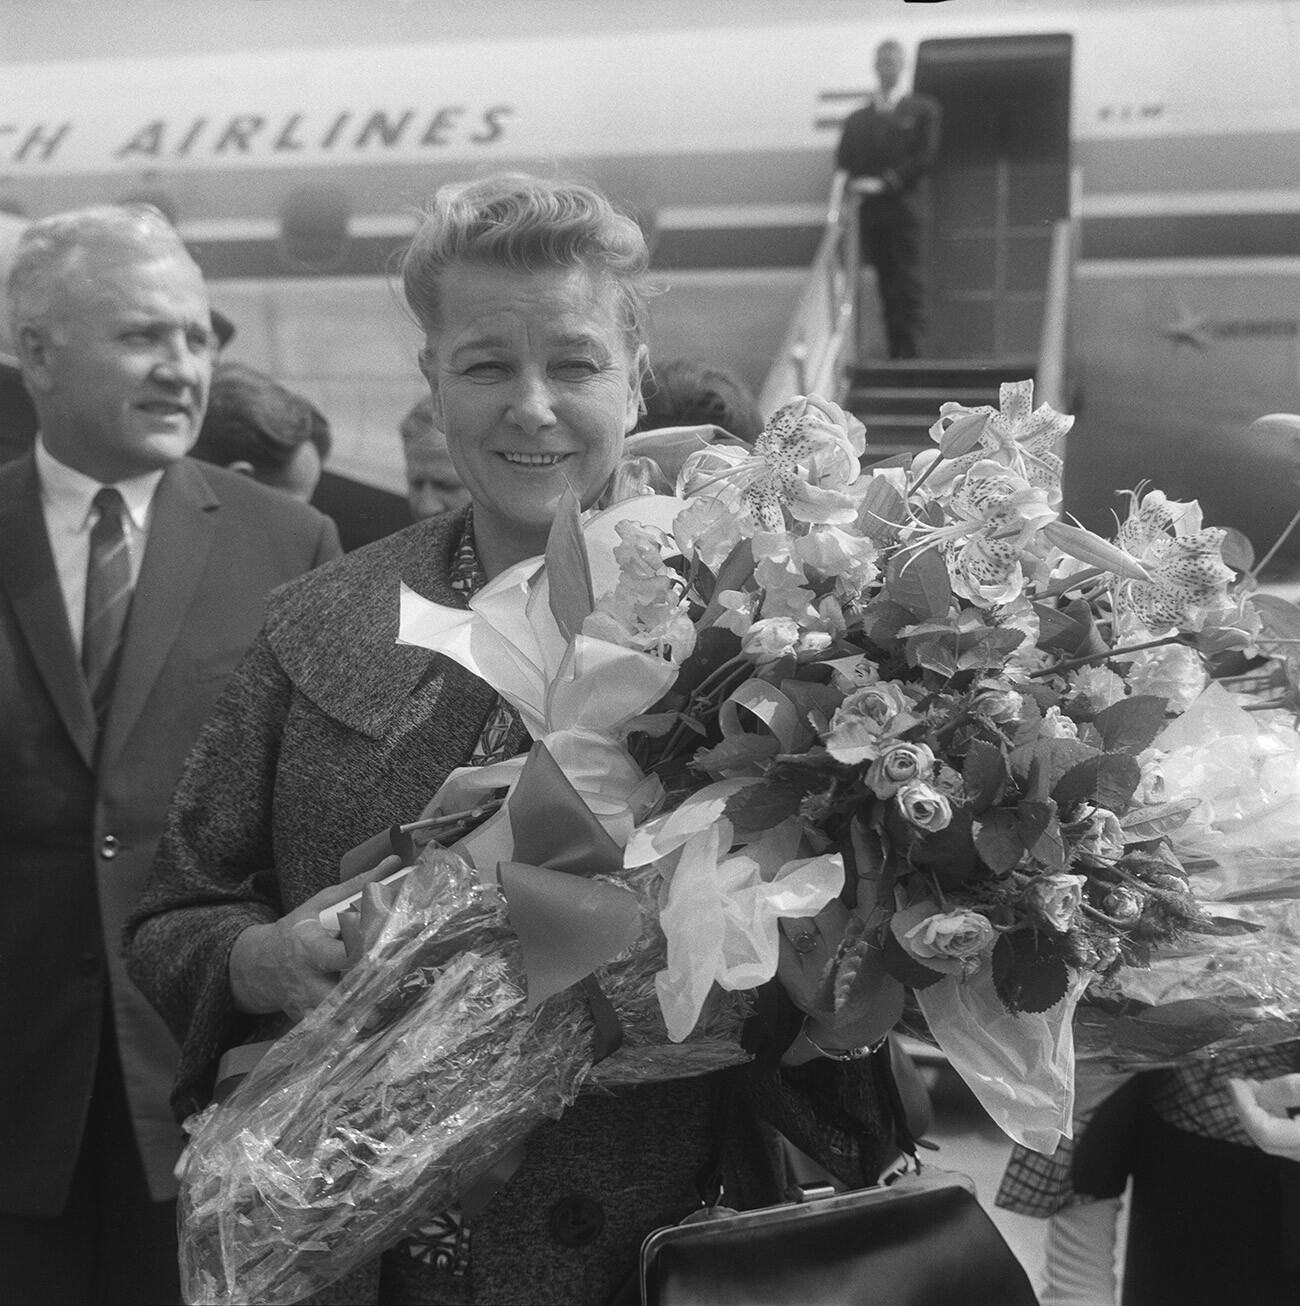 Yekaterina Furtseva arrives at Heathrow Airport, London, UK, 1963